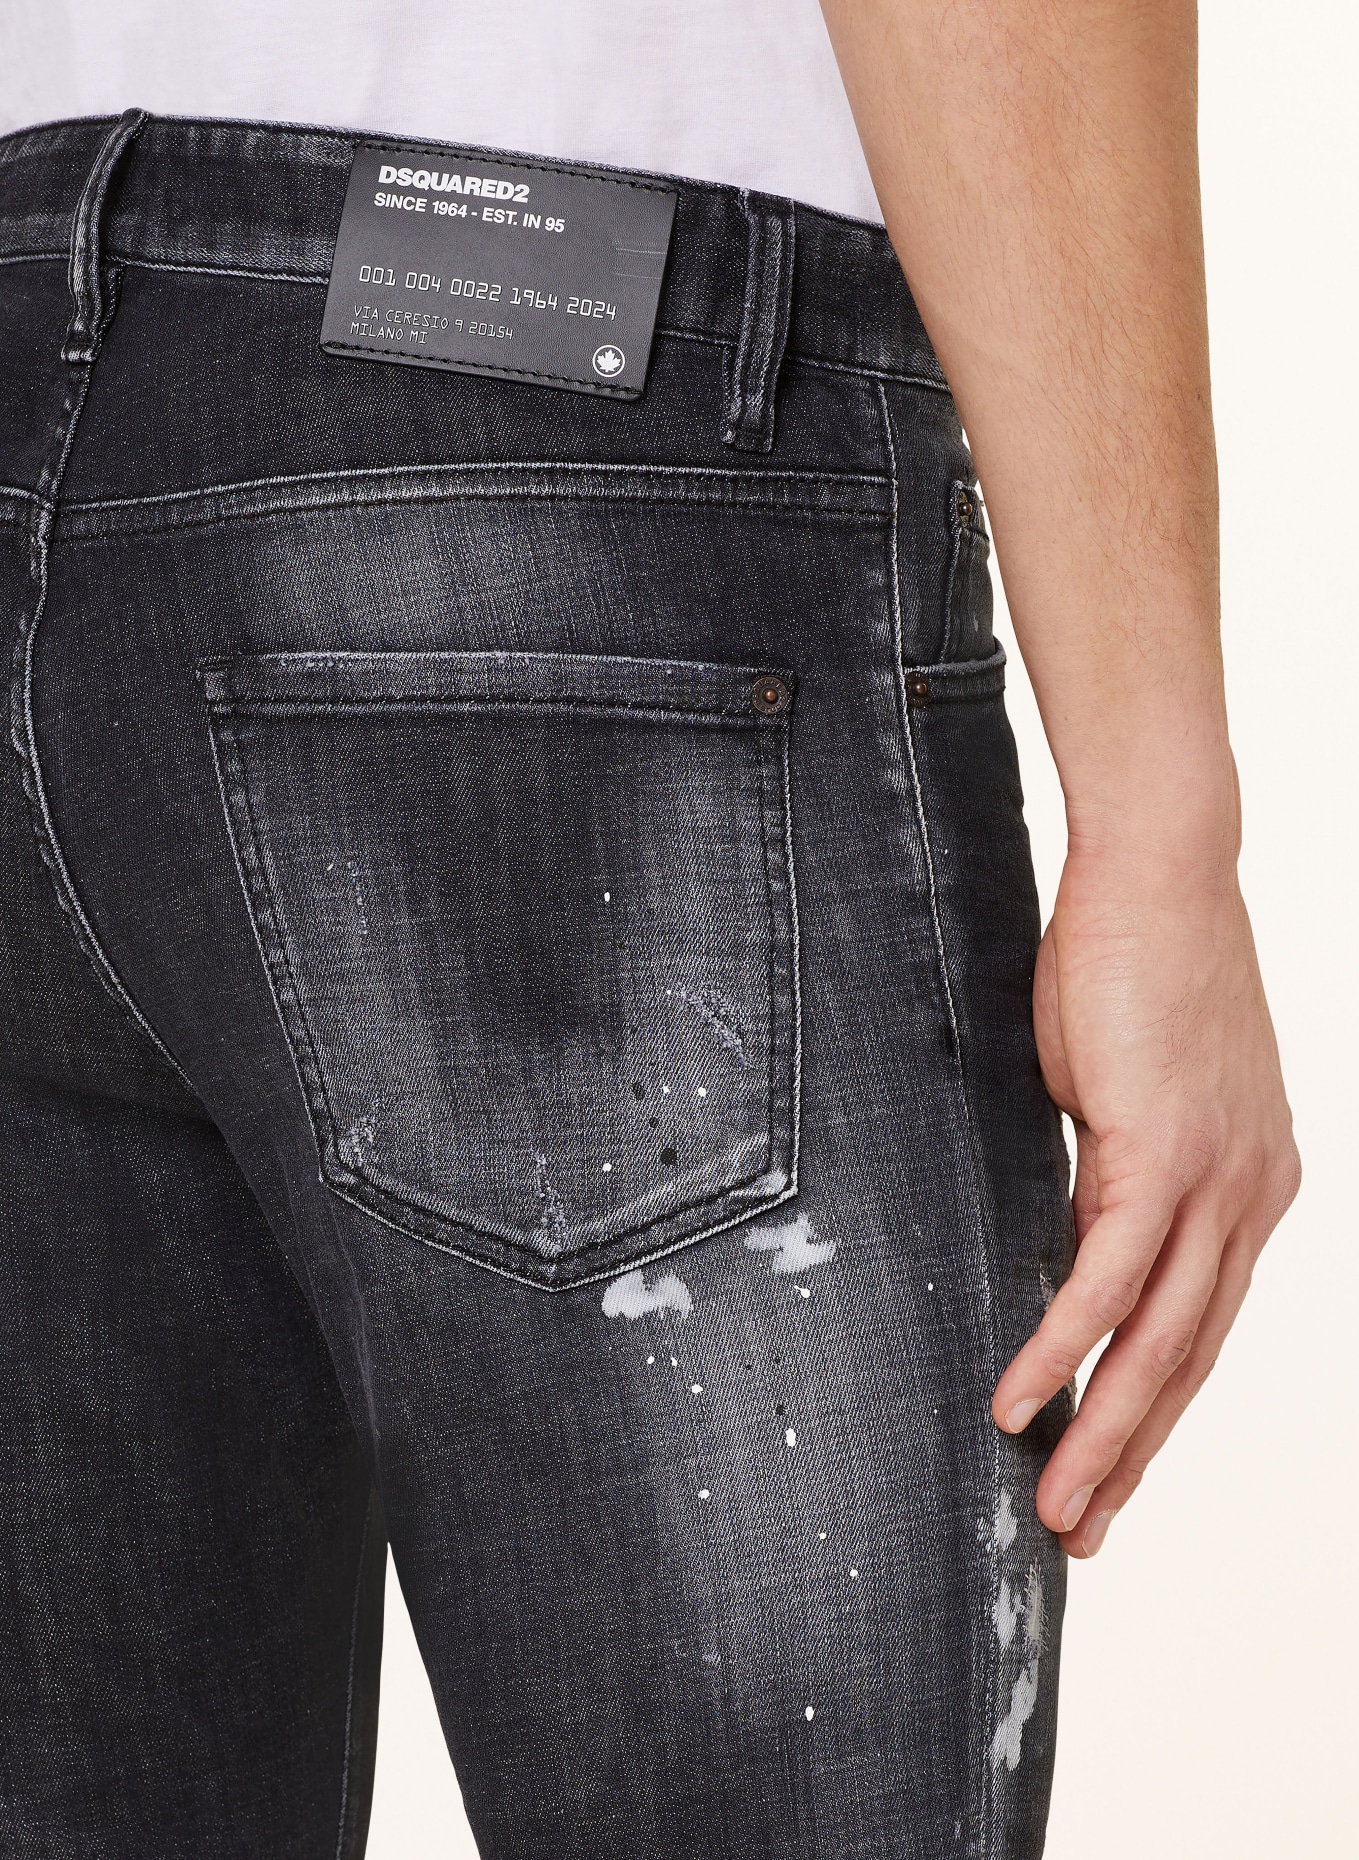 DSQUARED2 Destroyed Jeans COOL GUY Slim Fit, Farbe: 900  black (Bild 6)